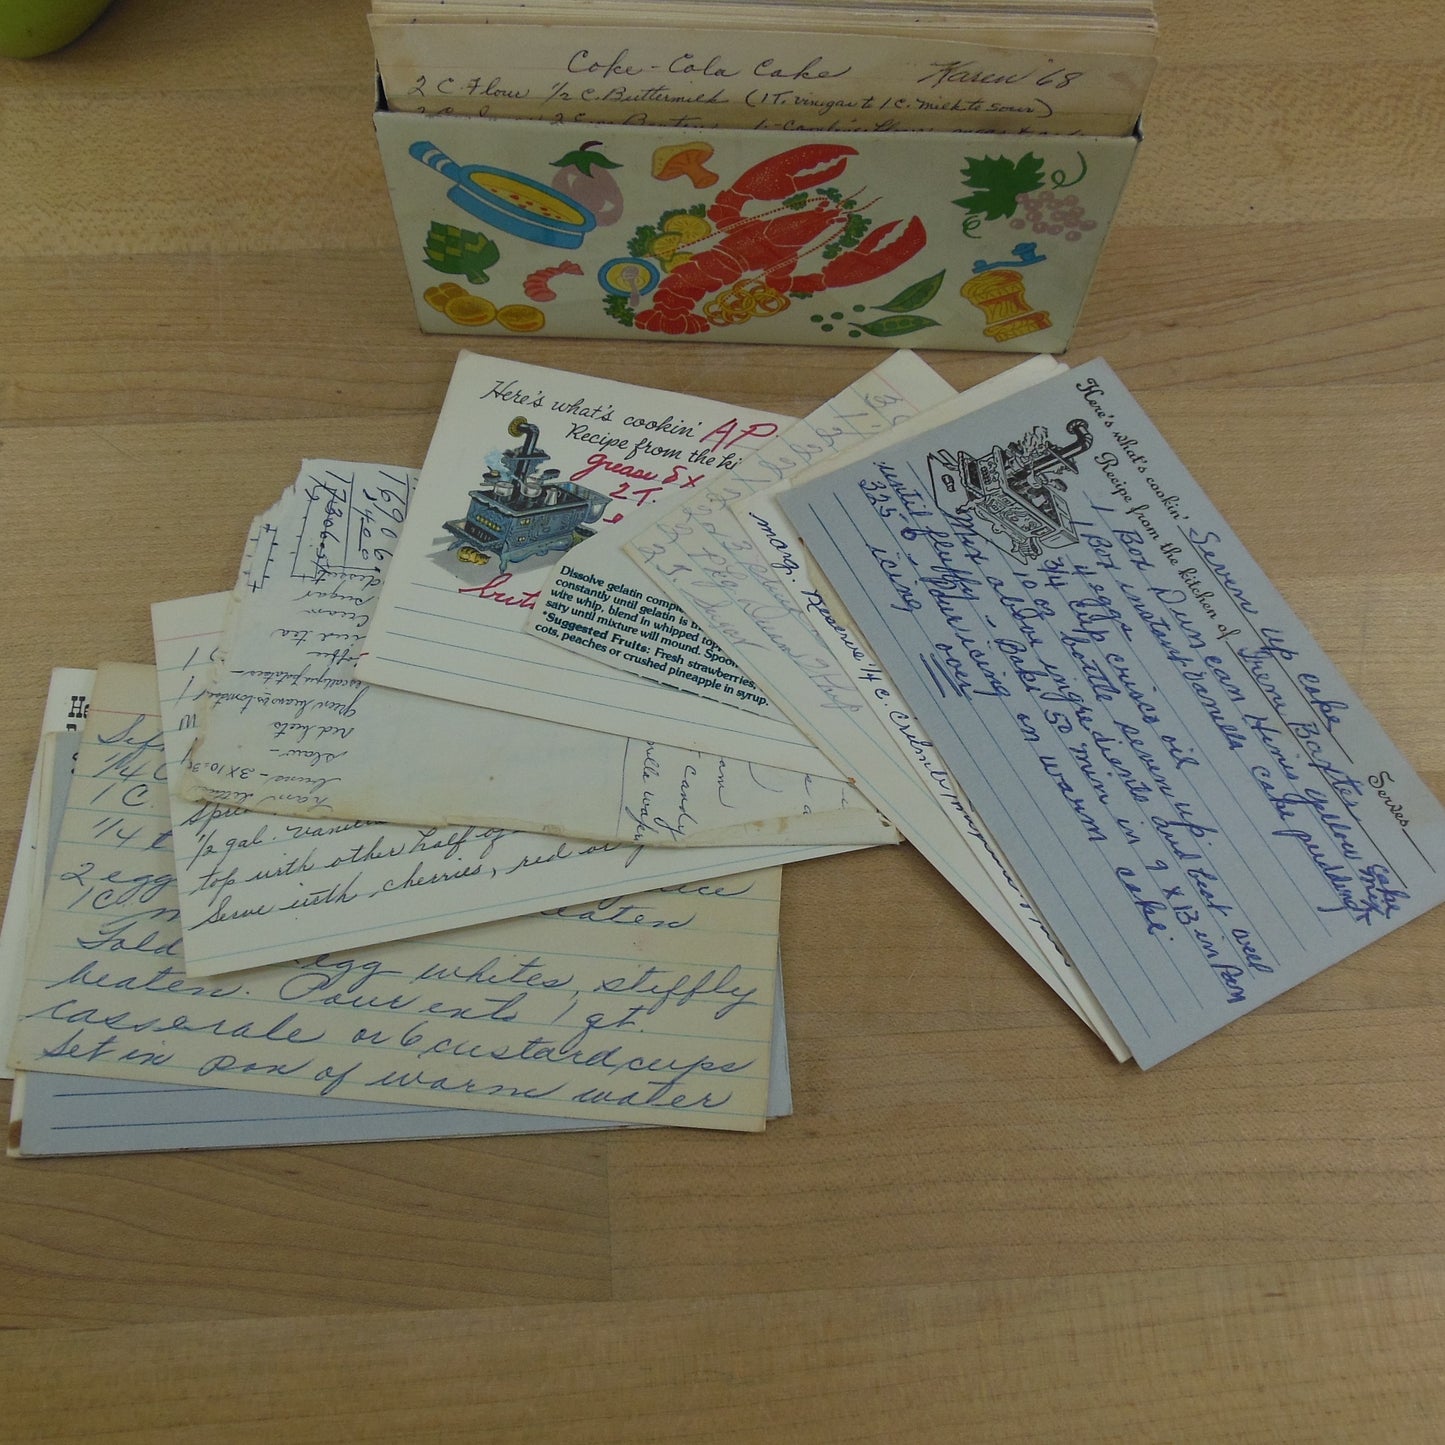 Ohio Art Co. Estate Recipe Box Full Handwritten Cards Used